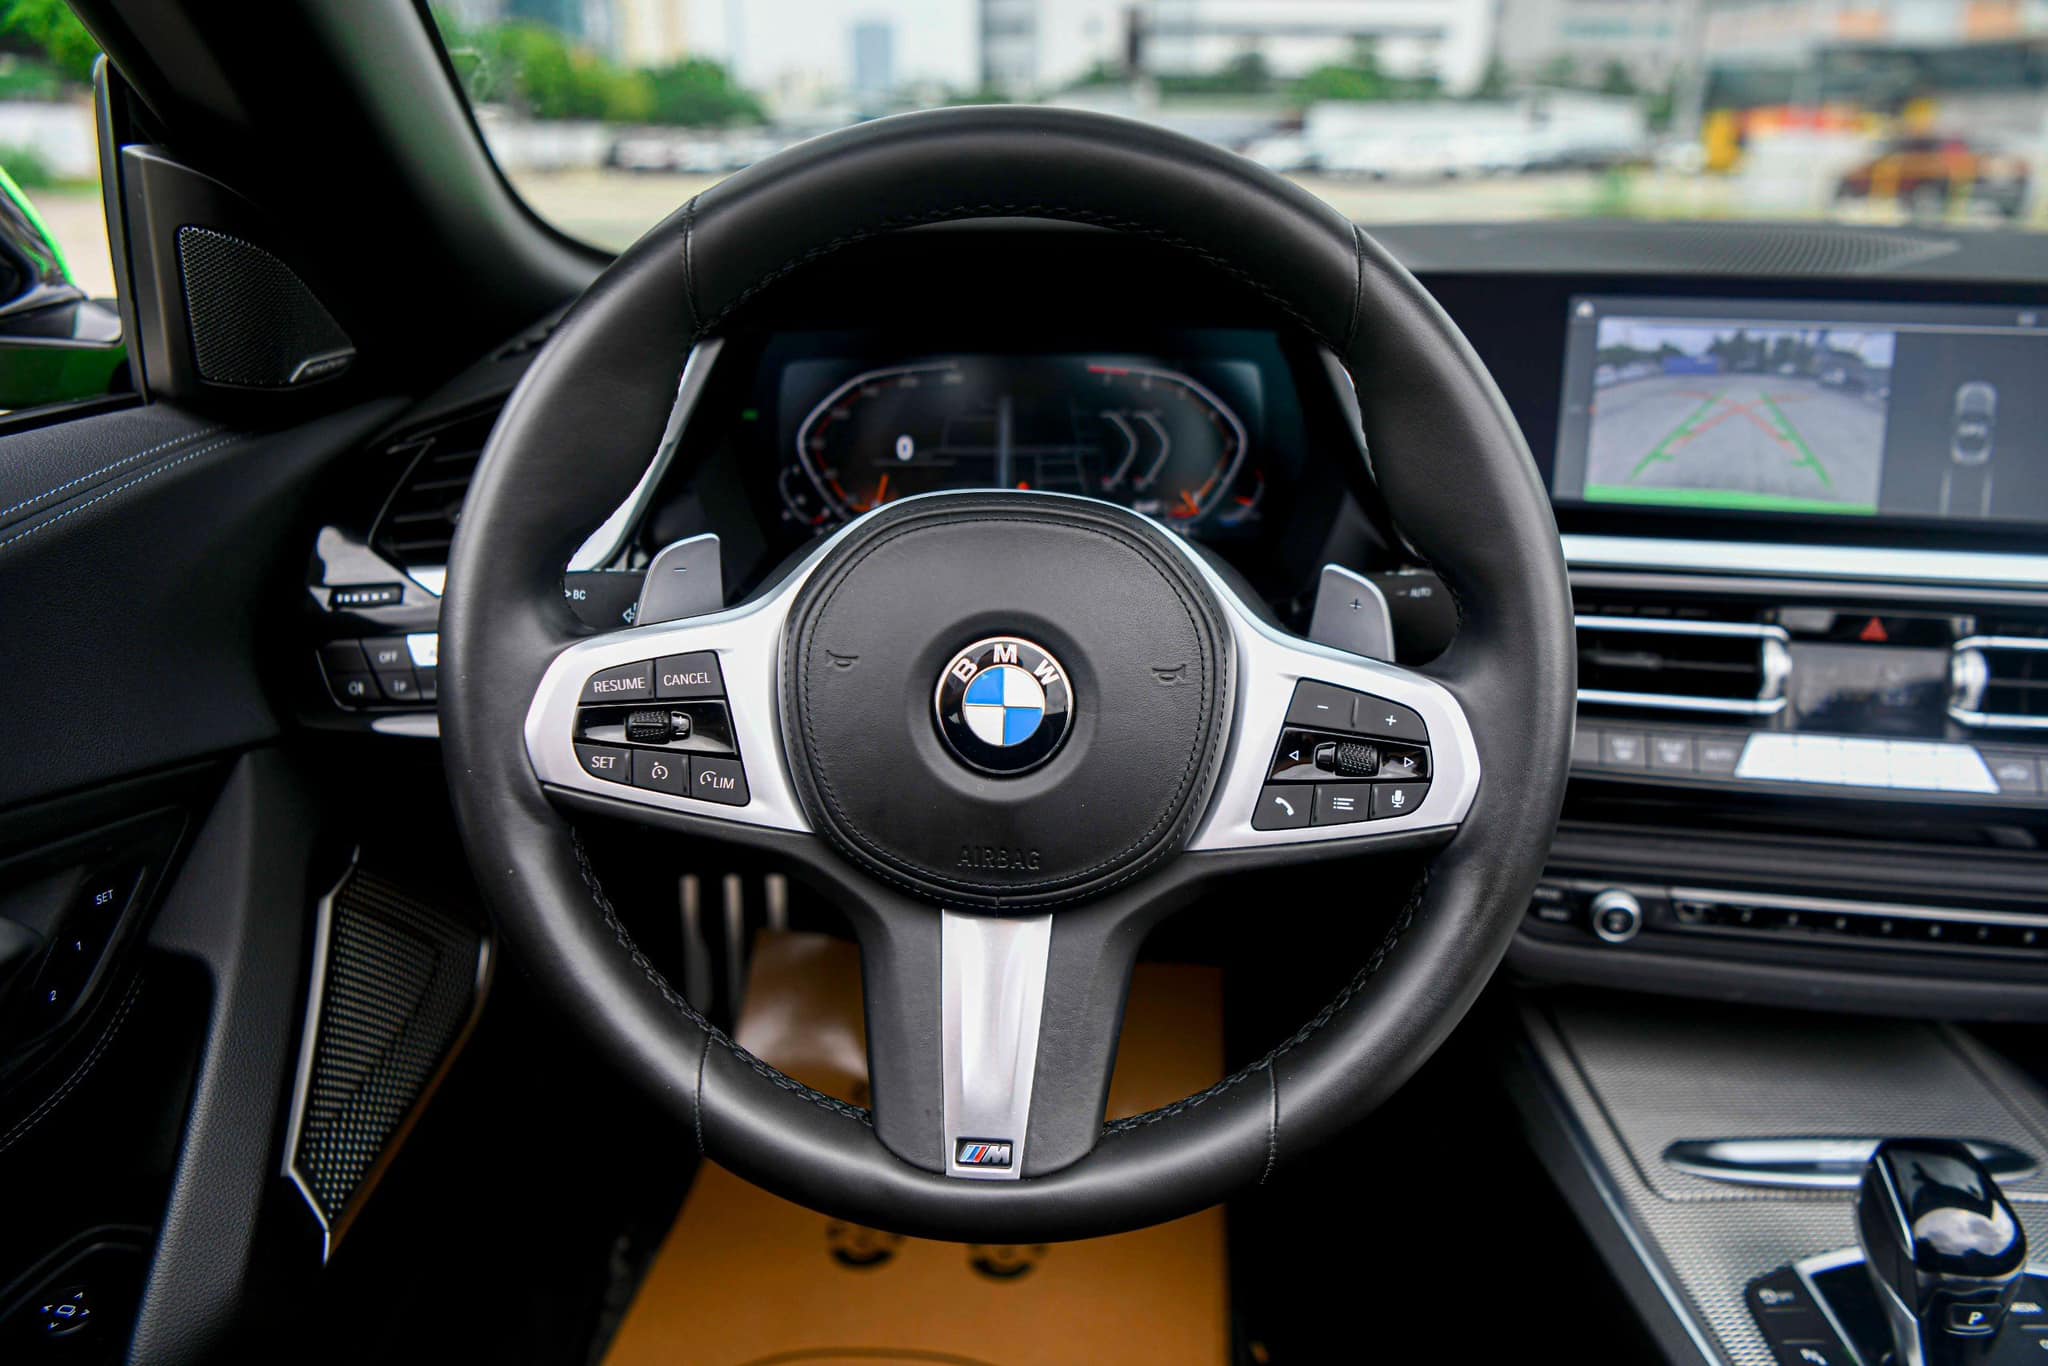 BMW Z4 full